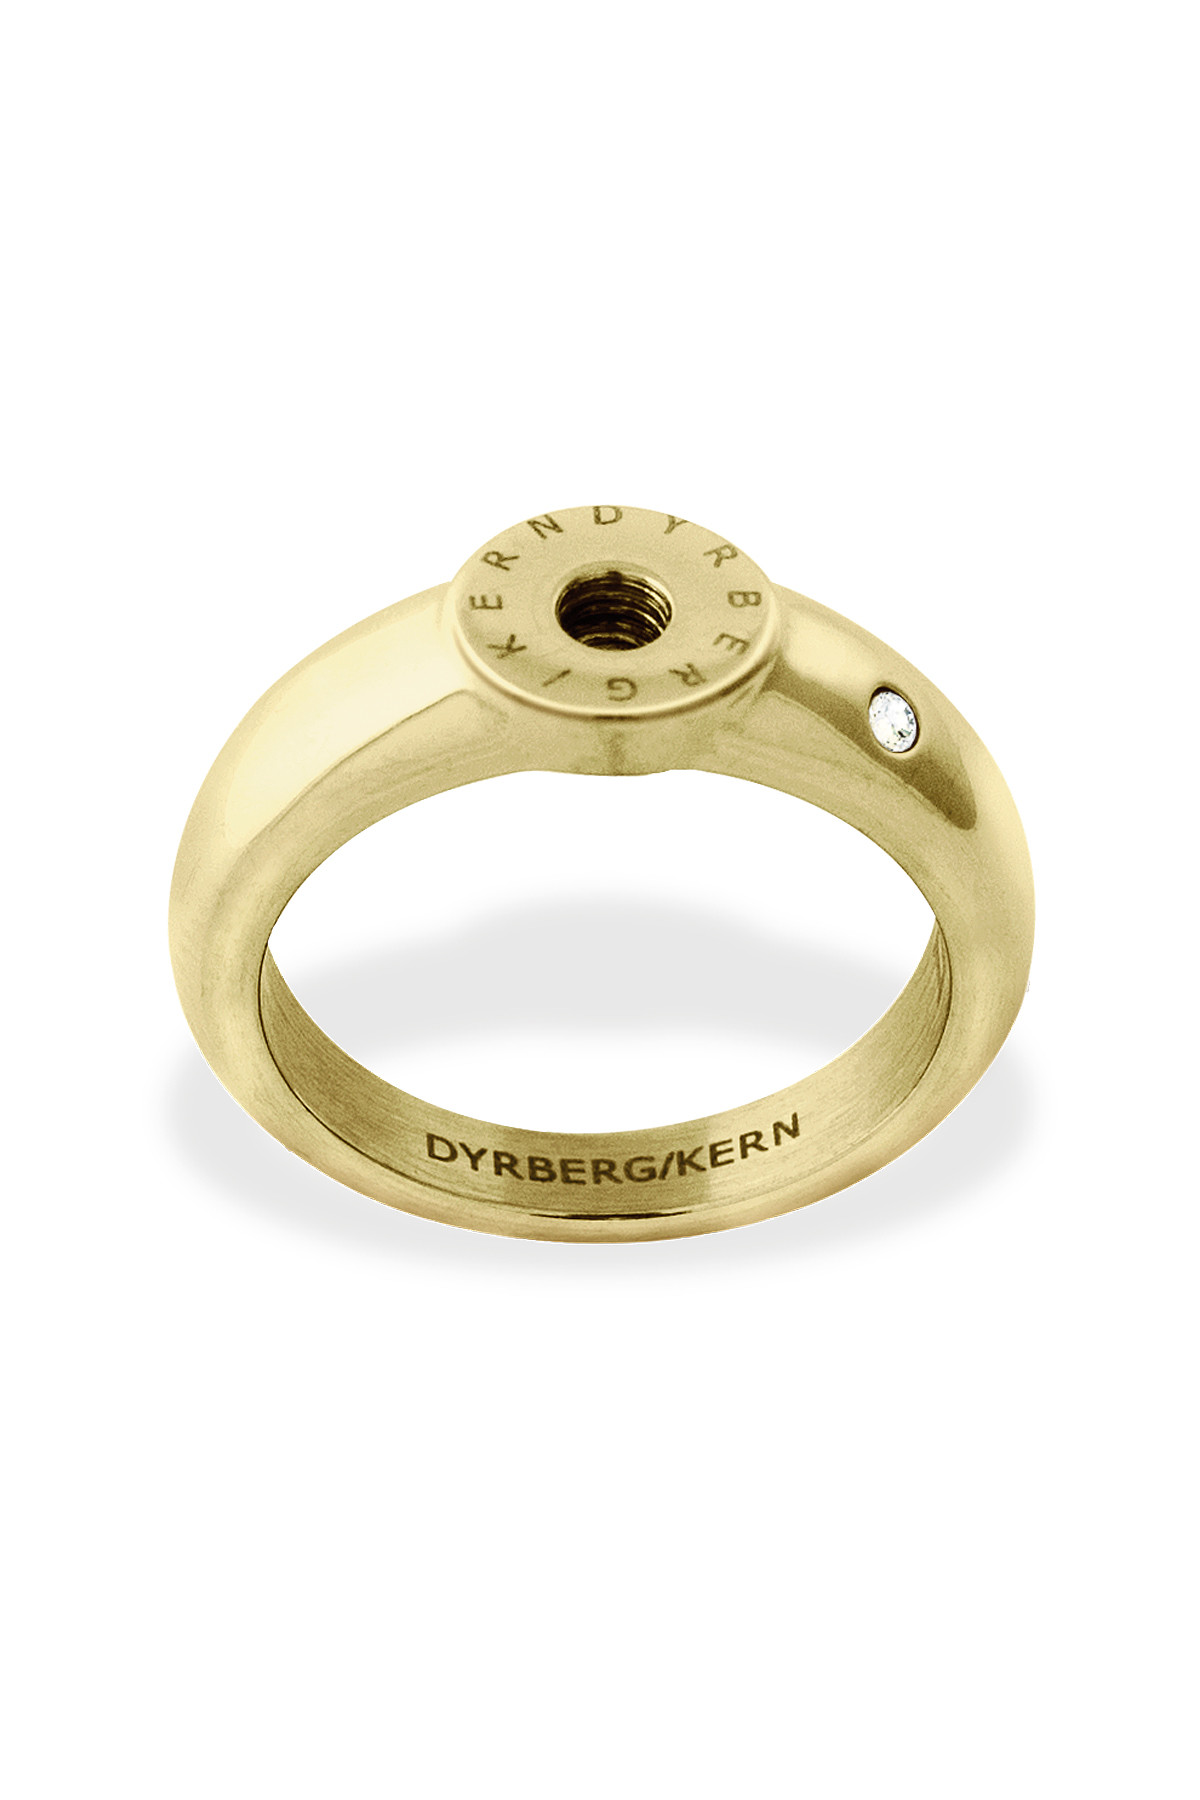 Se Dyrberg/Kern Ring Ring, Farve: Guld, Størrelse: IIII/60, Dame hos Dyrberg/Kern